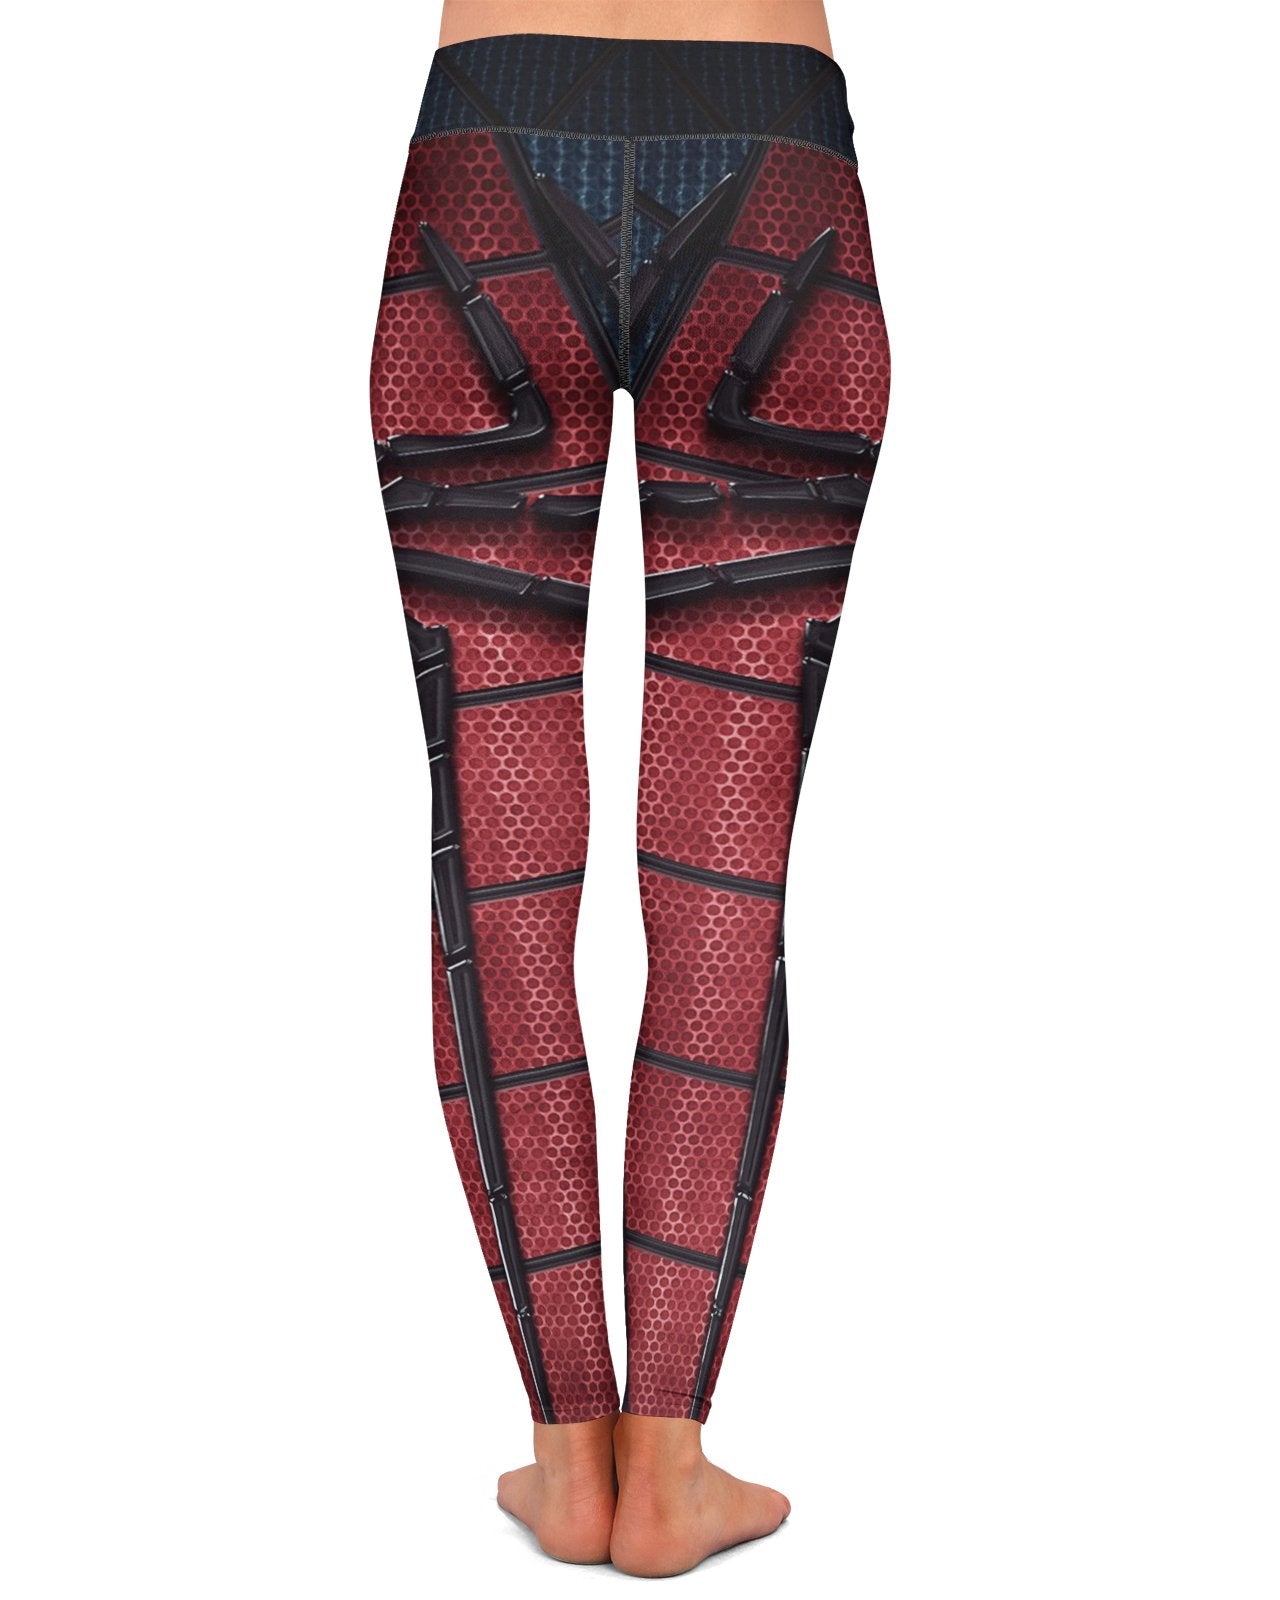 spiderman yoga pants